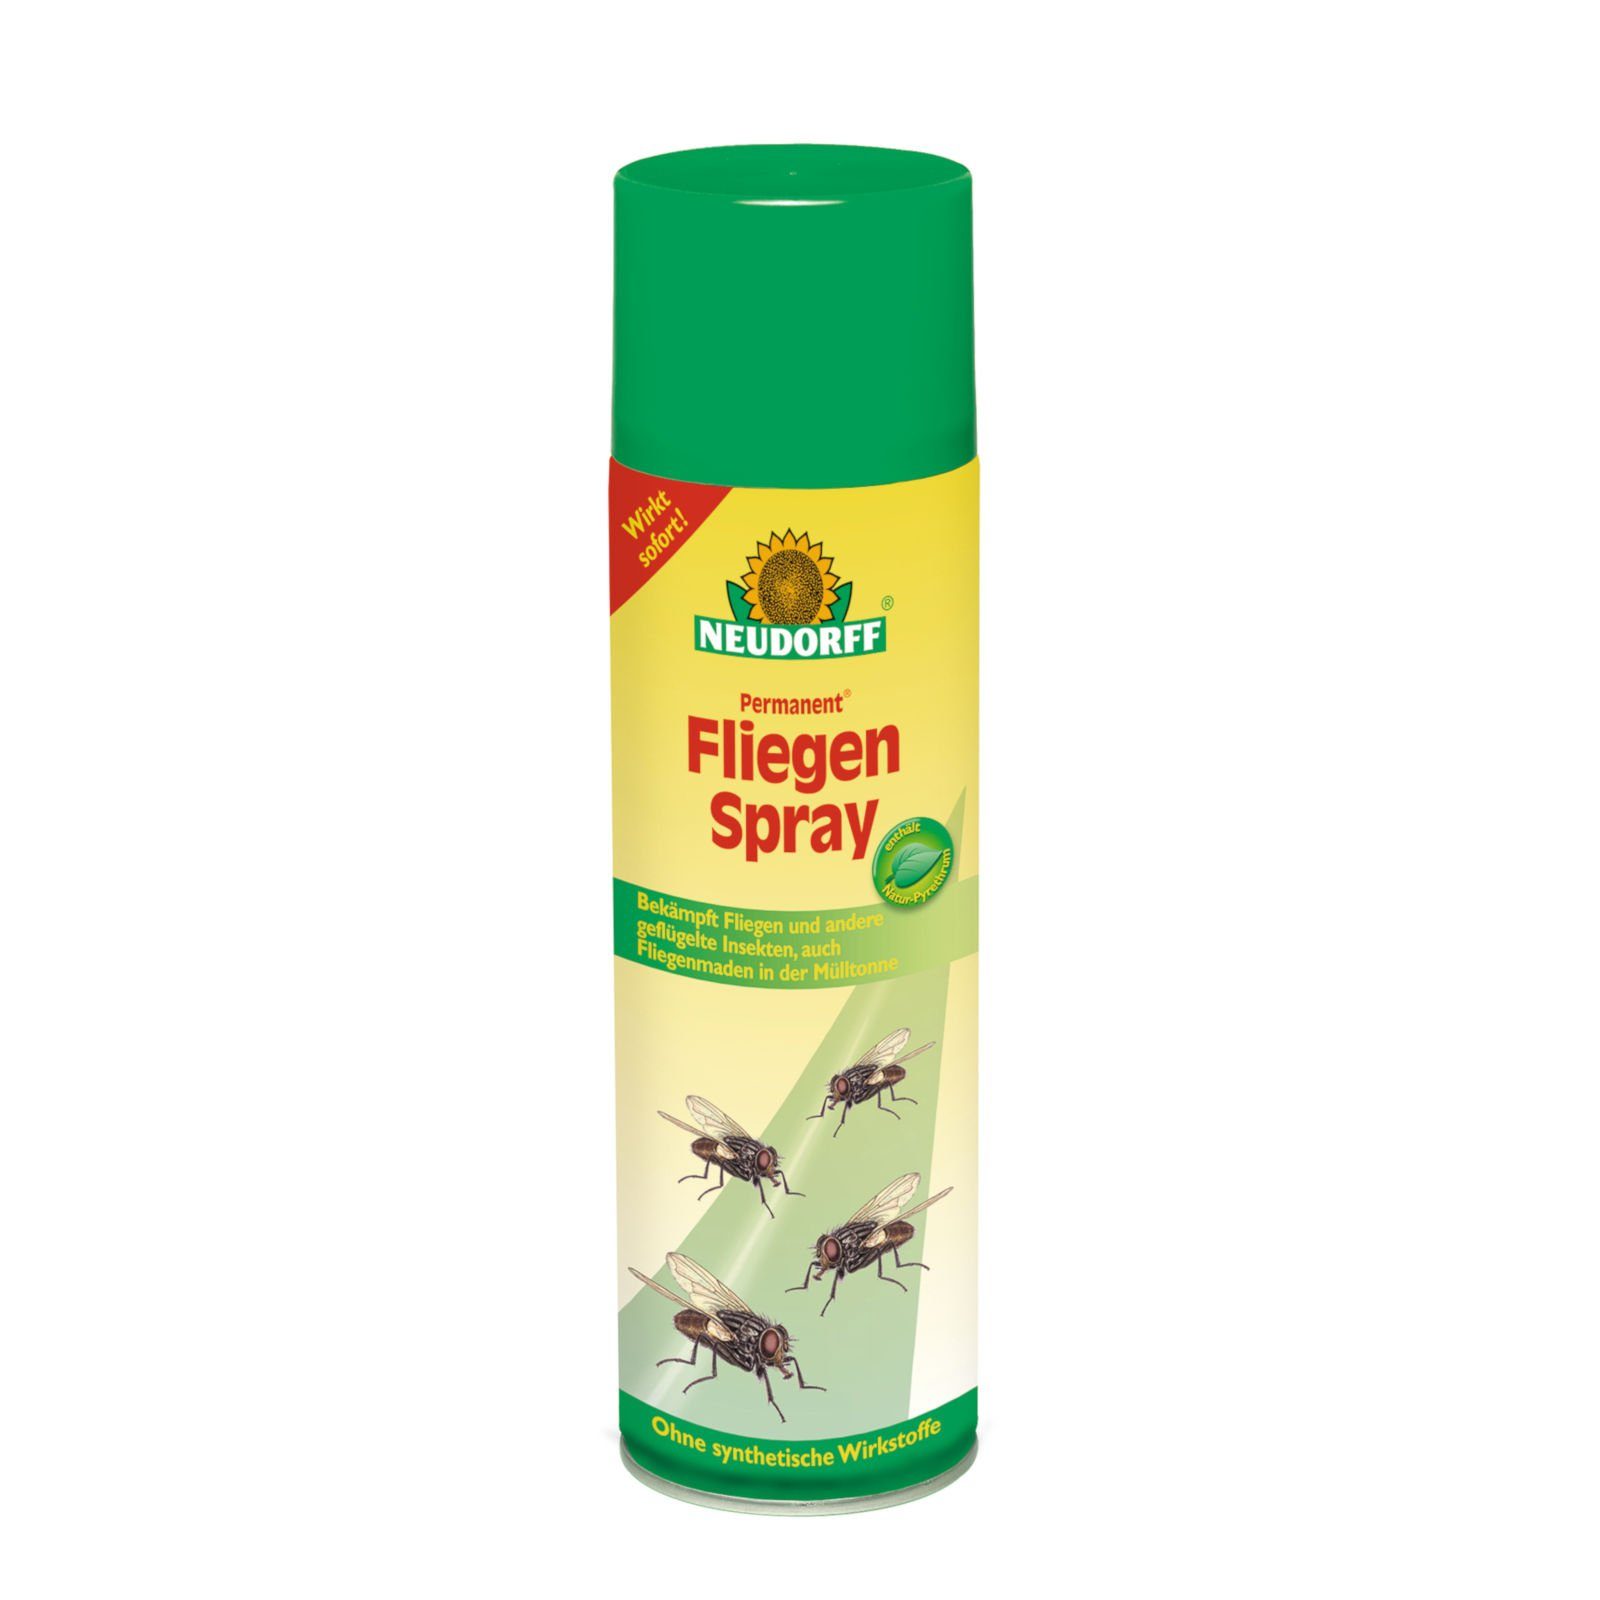 FliegenSpray 6x 500 Permanent ml Insektenspray Neudorff -